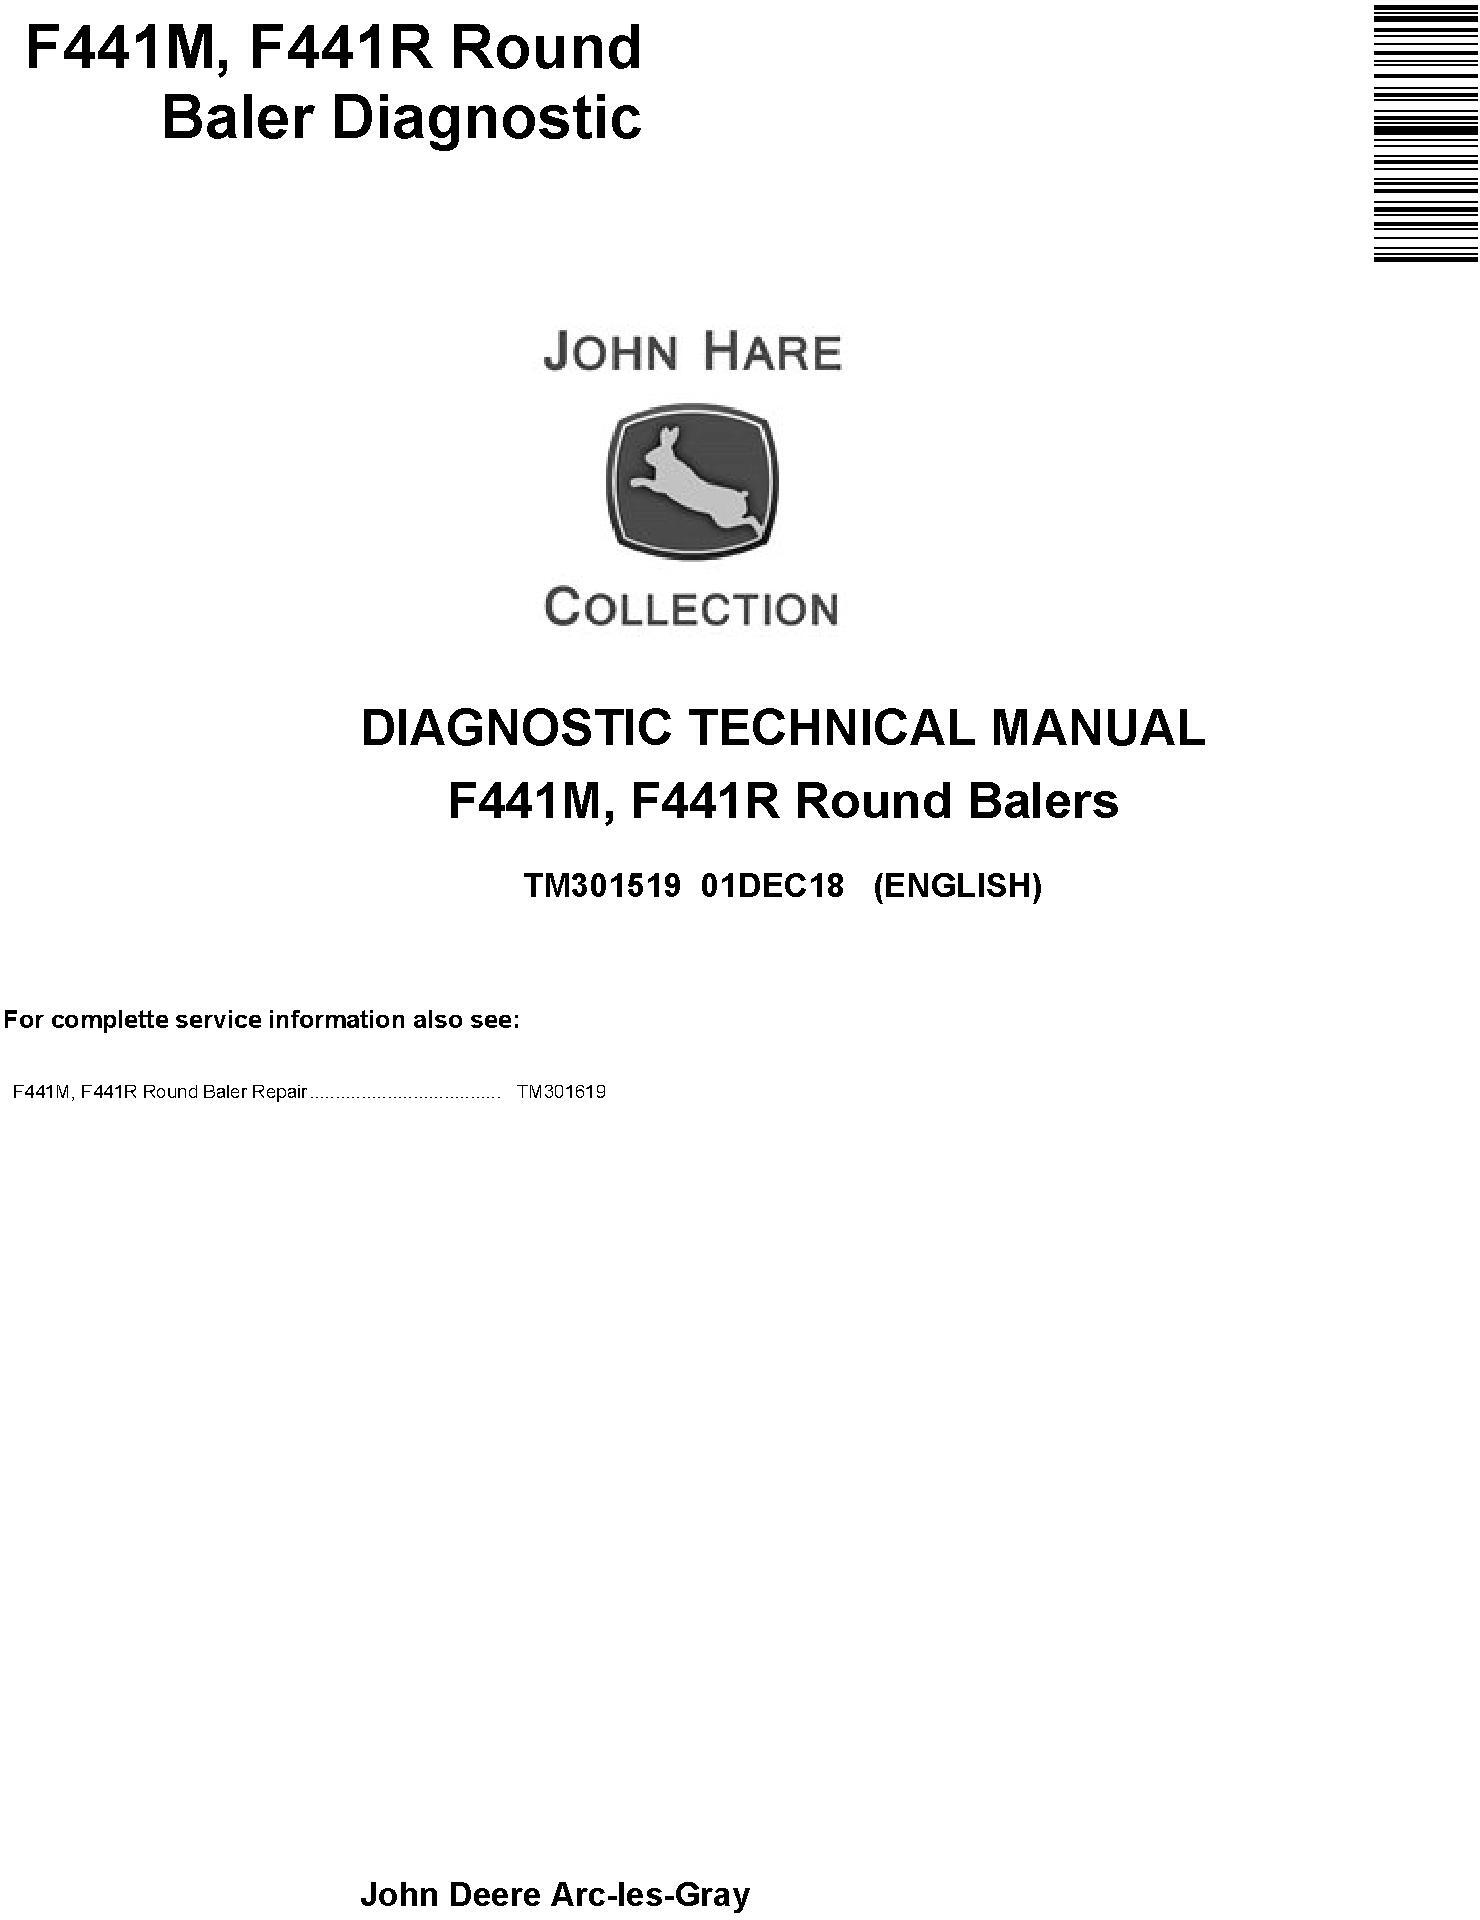 John Deere F441M F441R Round Balers Diagnostic Technical Manual TM301519